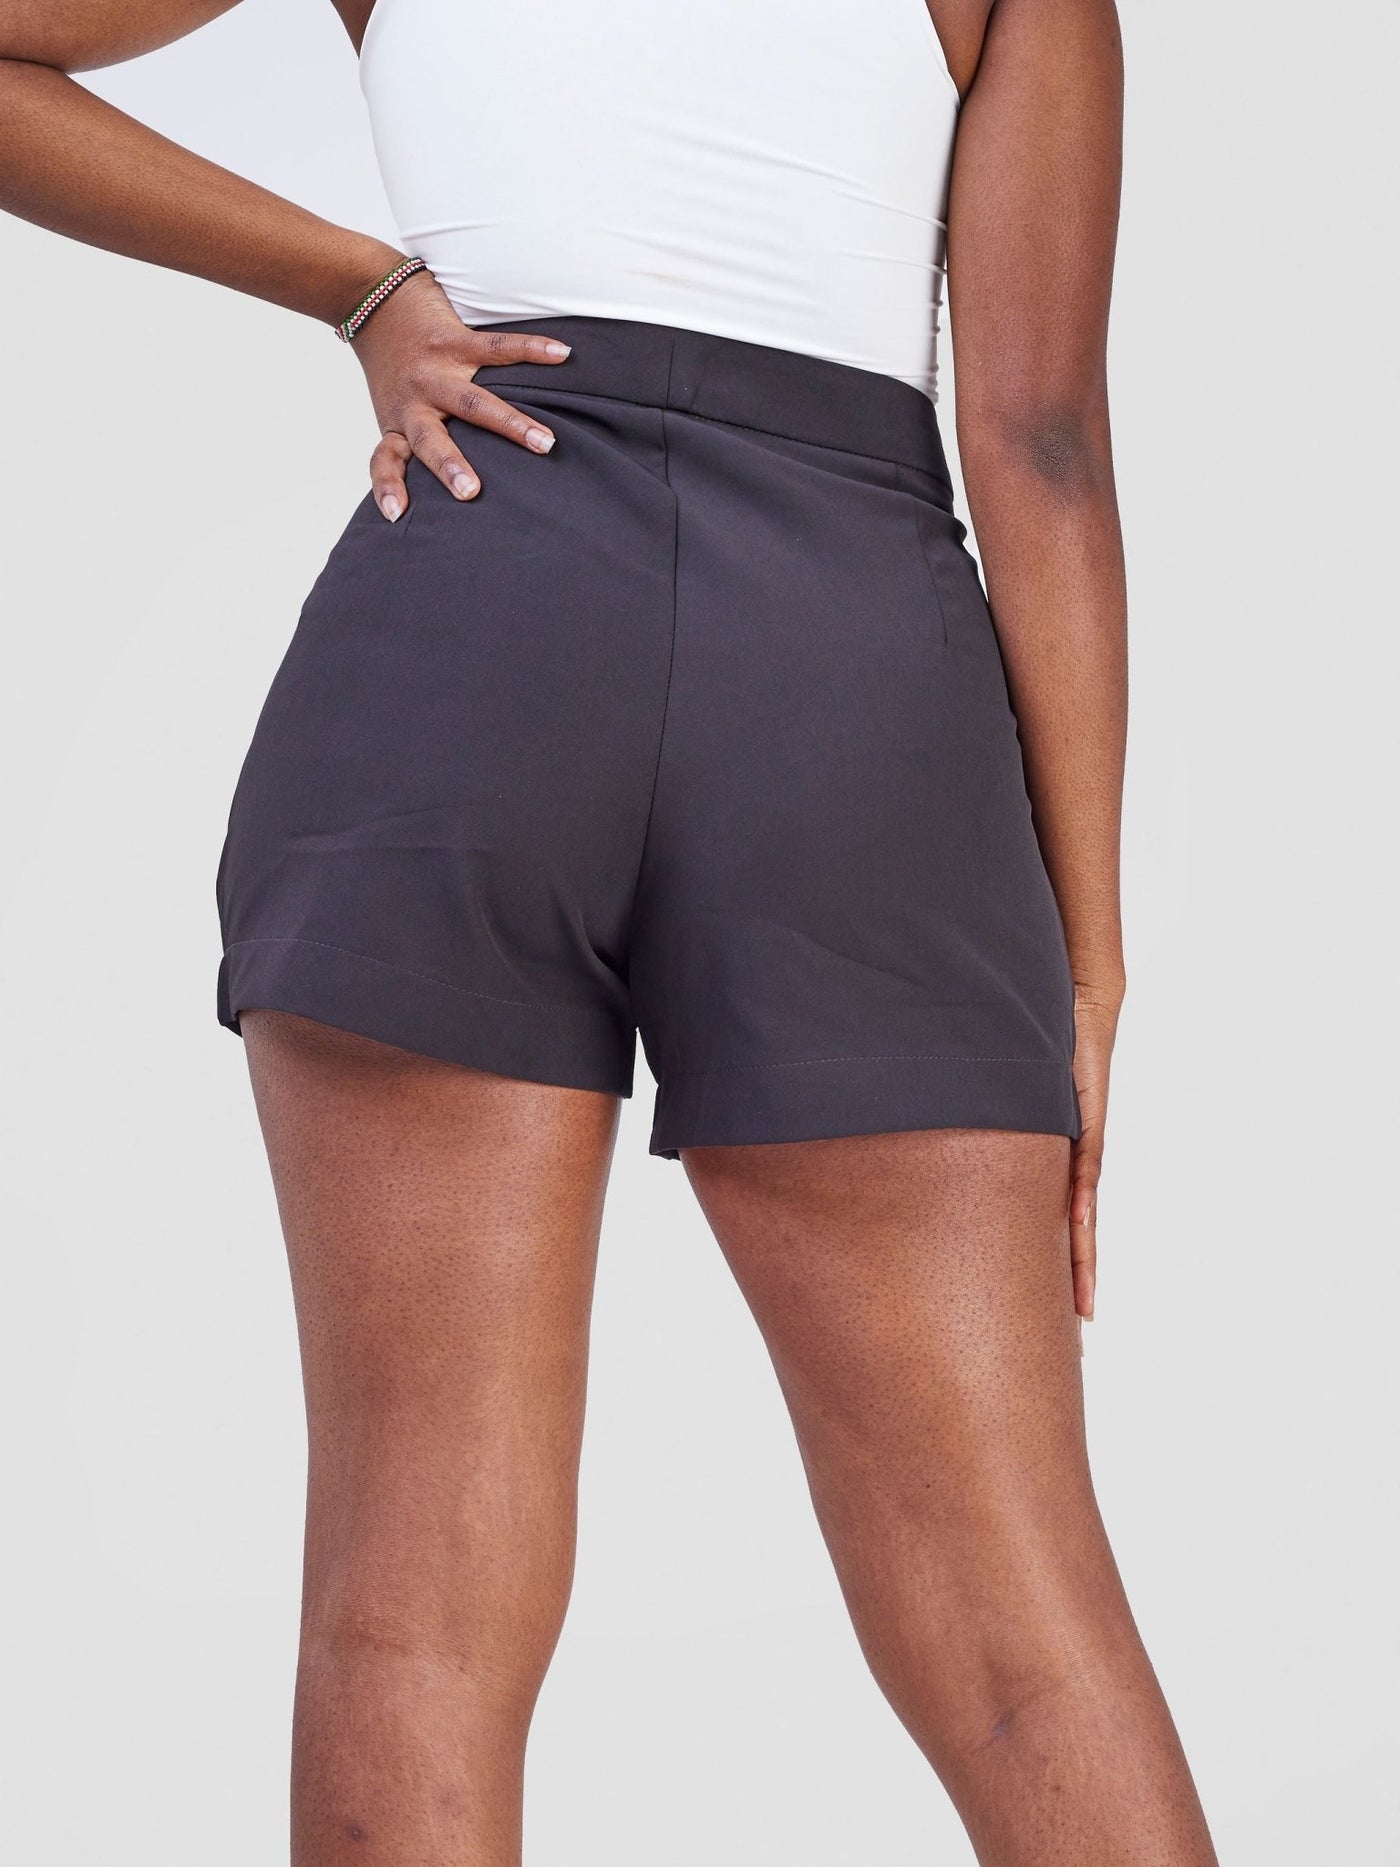 Anika Clip Shorts with Angular Pockets - Black - Shopzetu